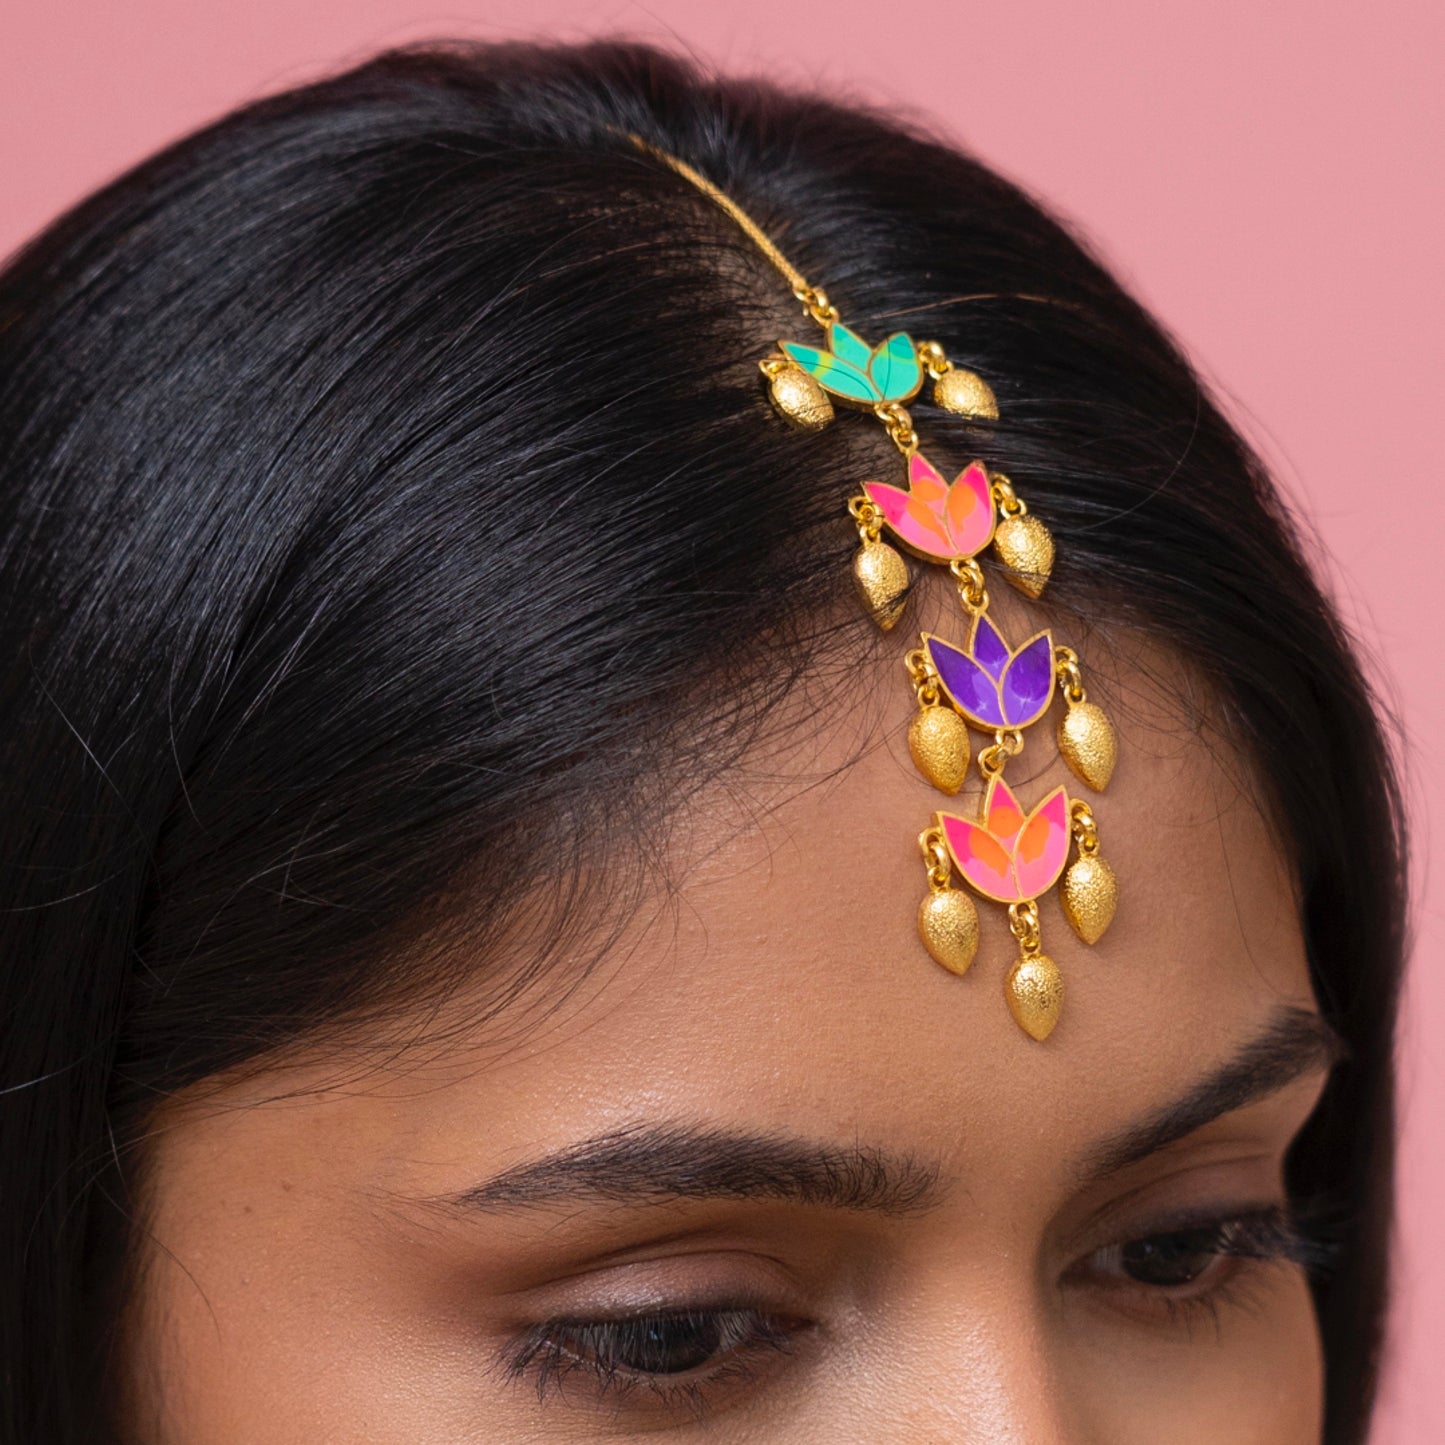 Mystic lotus earrings and mangtika